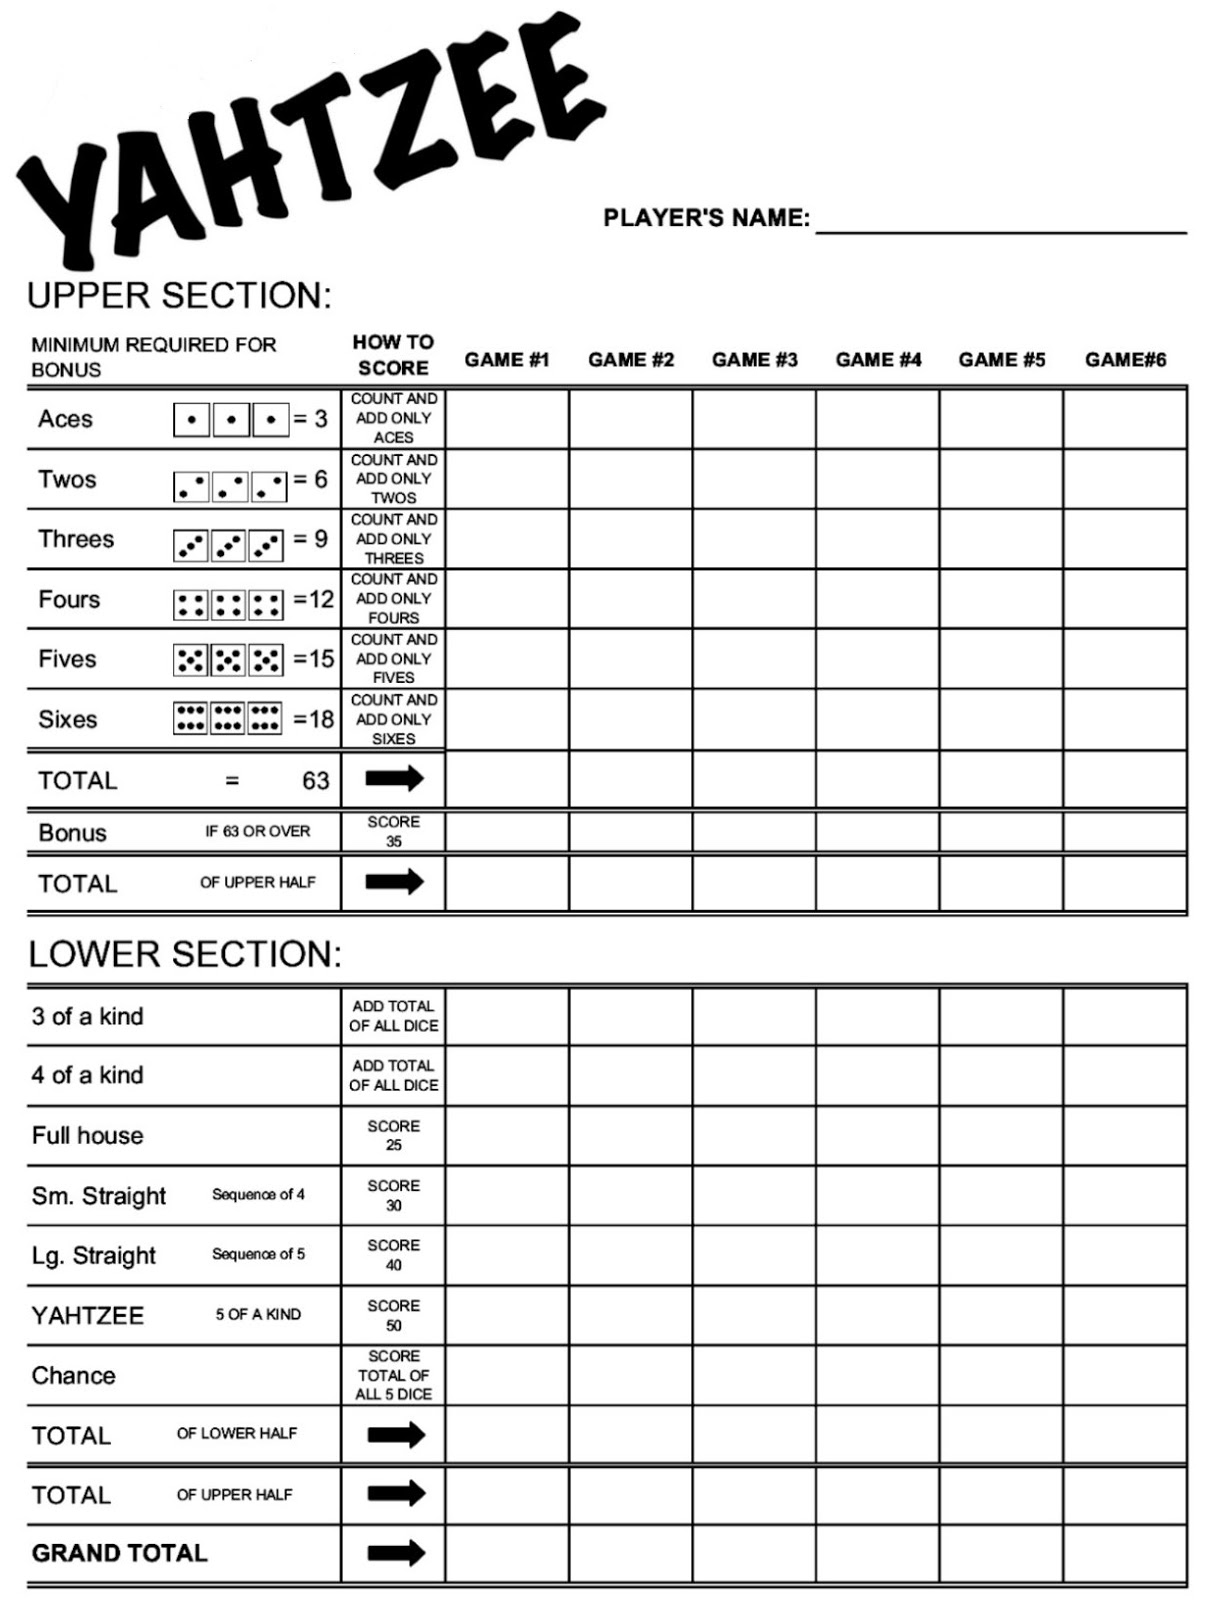 yahtzee-scorecard-jpg-1211-1600-bordspellen-spelletjes-spellen